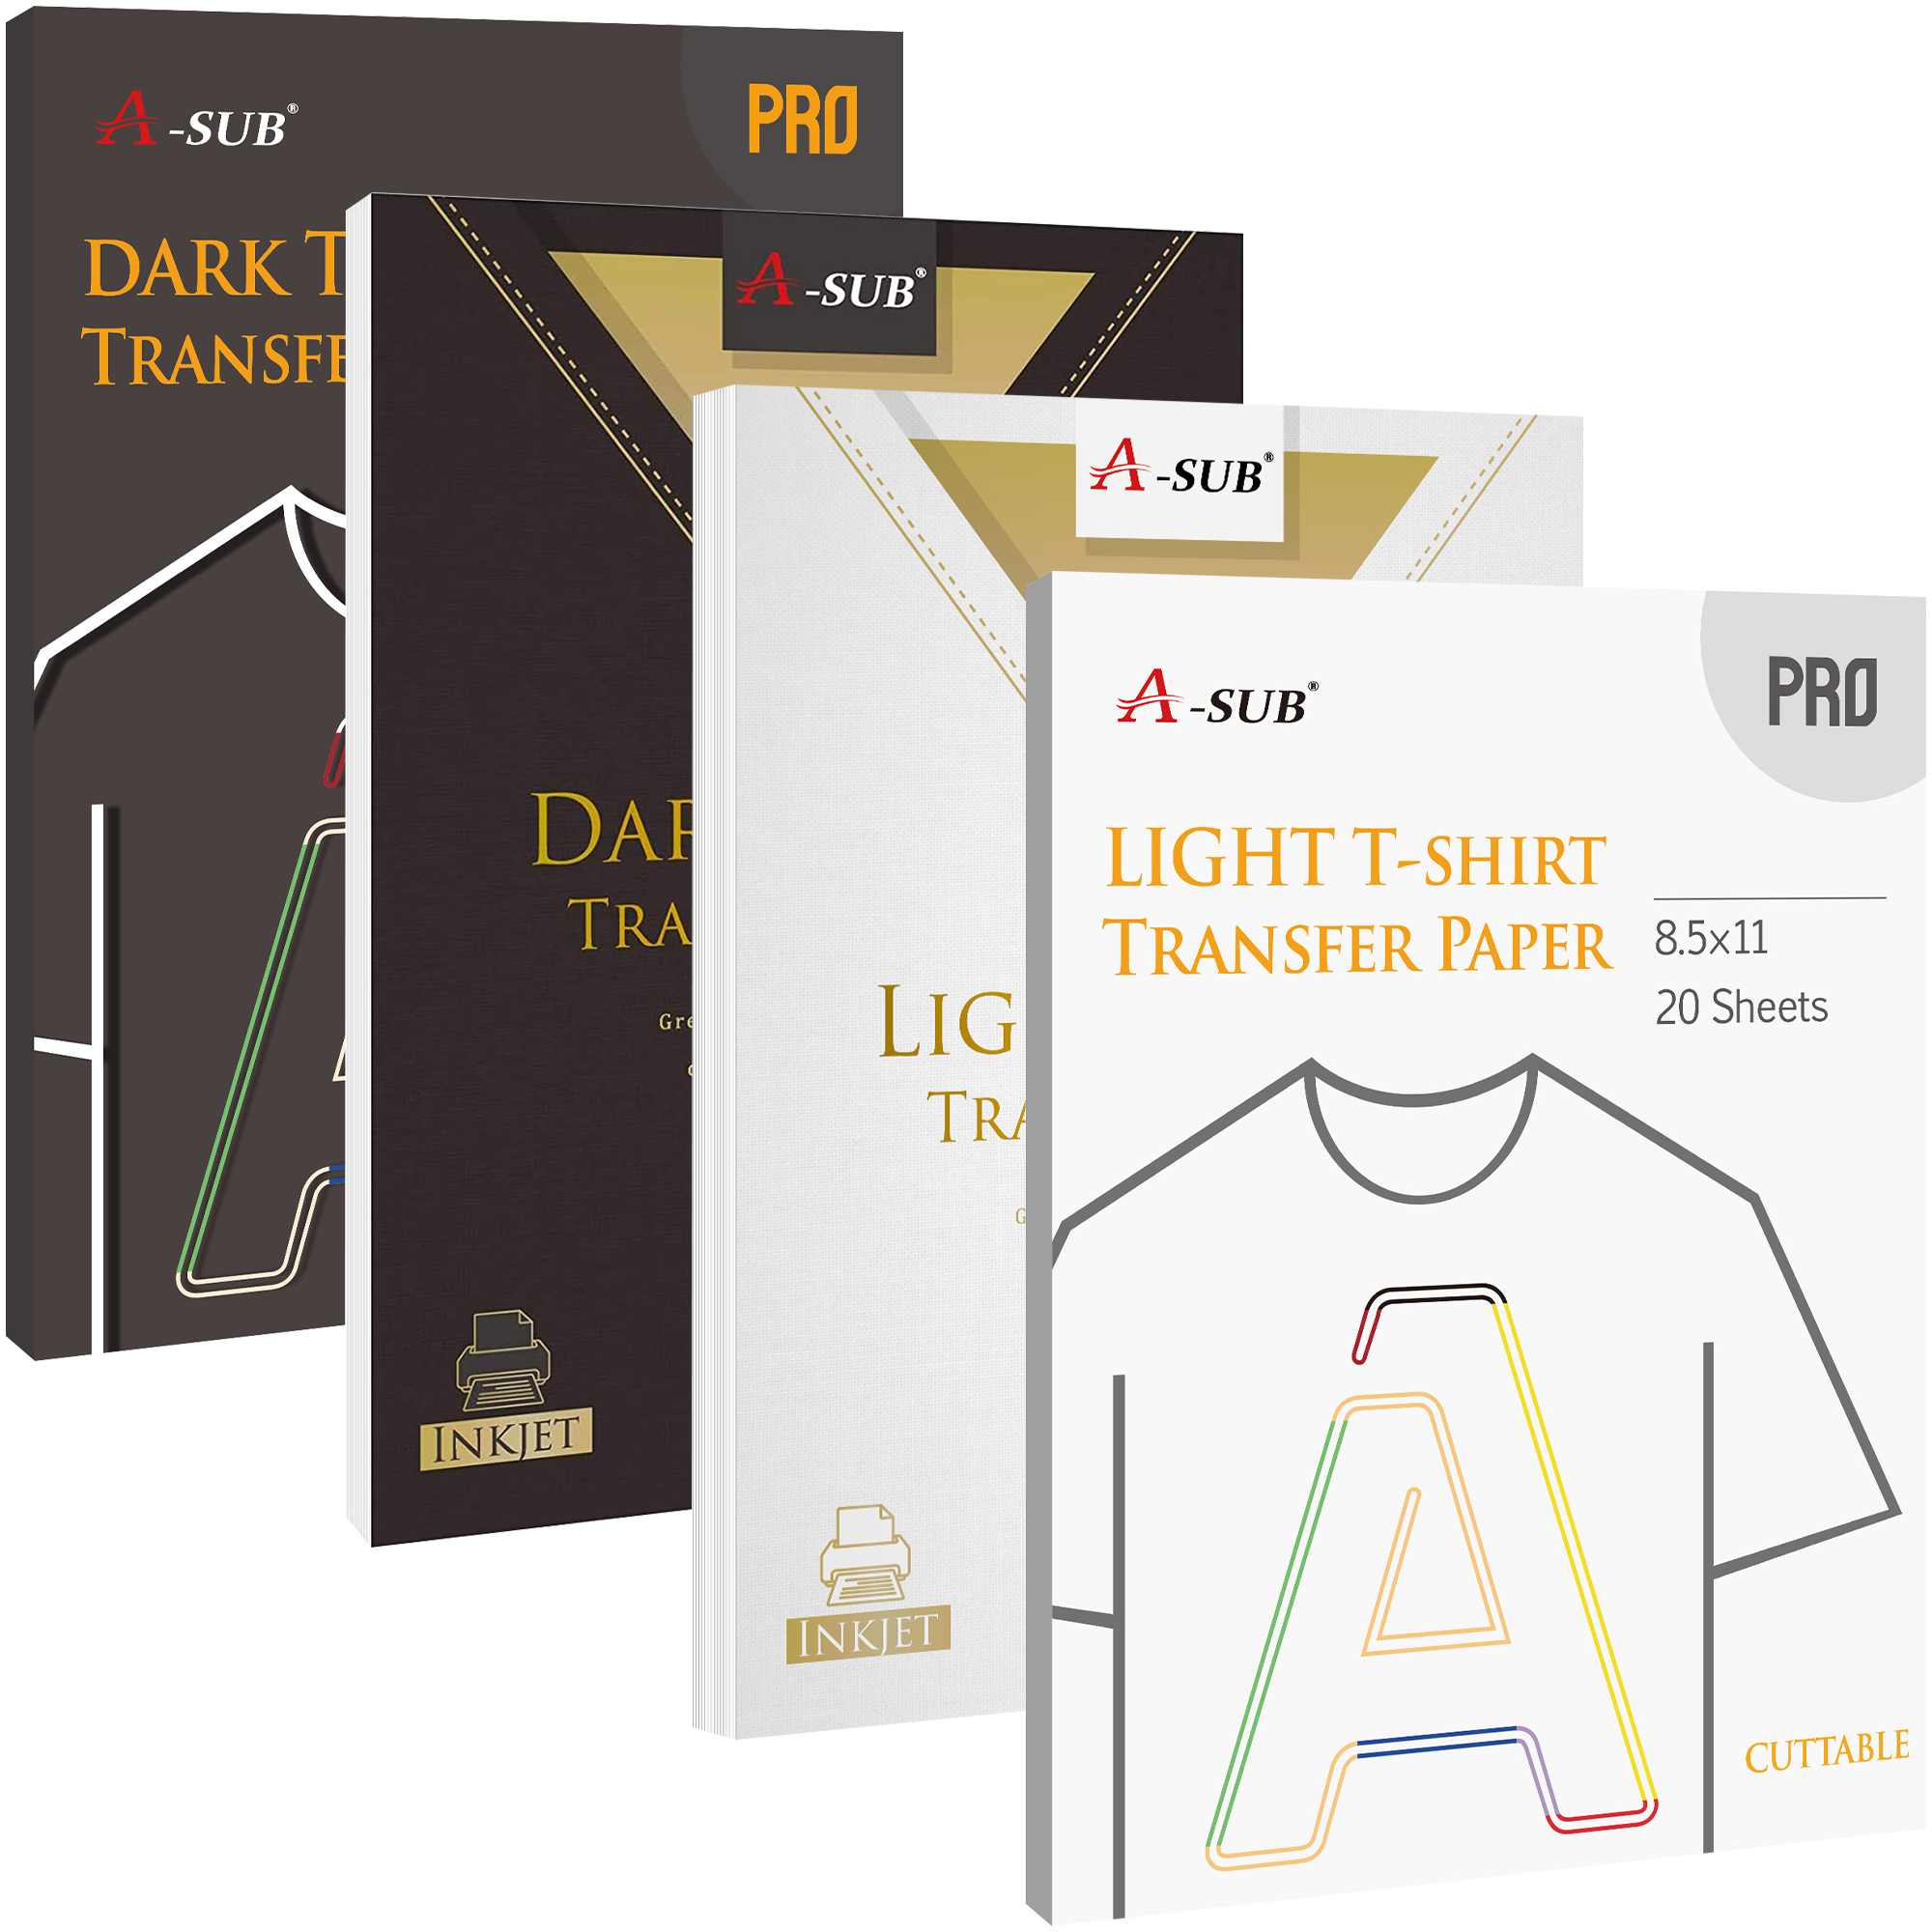 A-SUB PRO Inkjet Iron-on Dark Transfer Paper for Fabrics 8.5x11 20